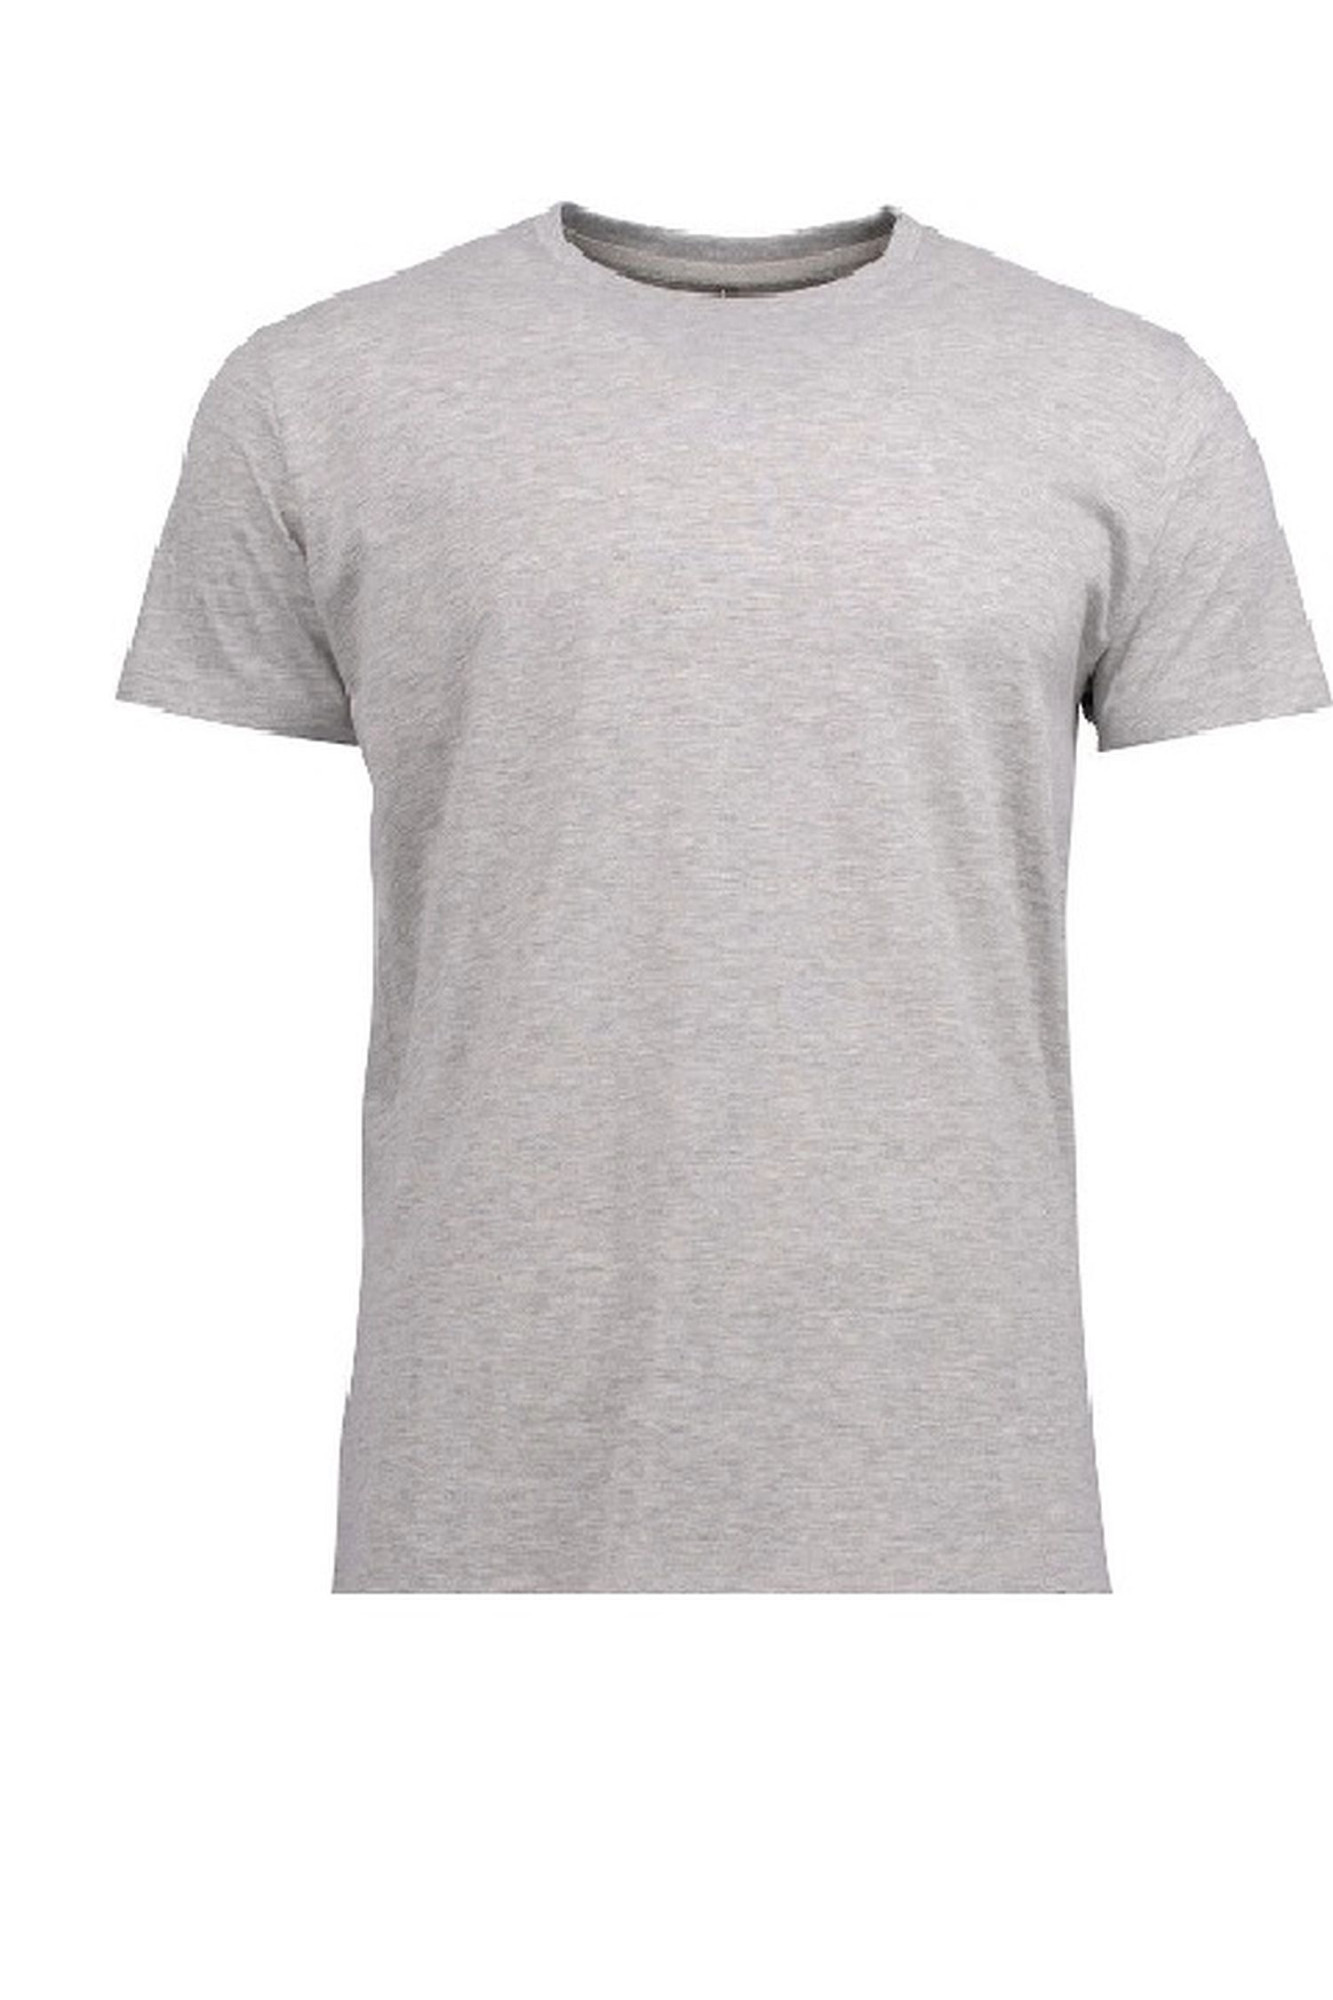 Pánské tričko 002 grey - NOVITI šedá XL